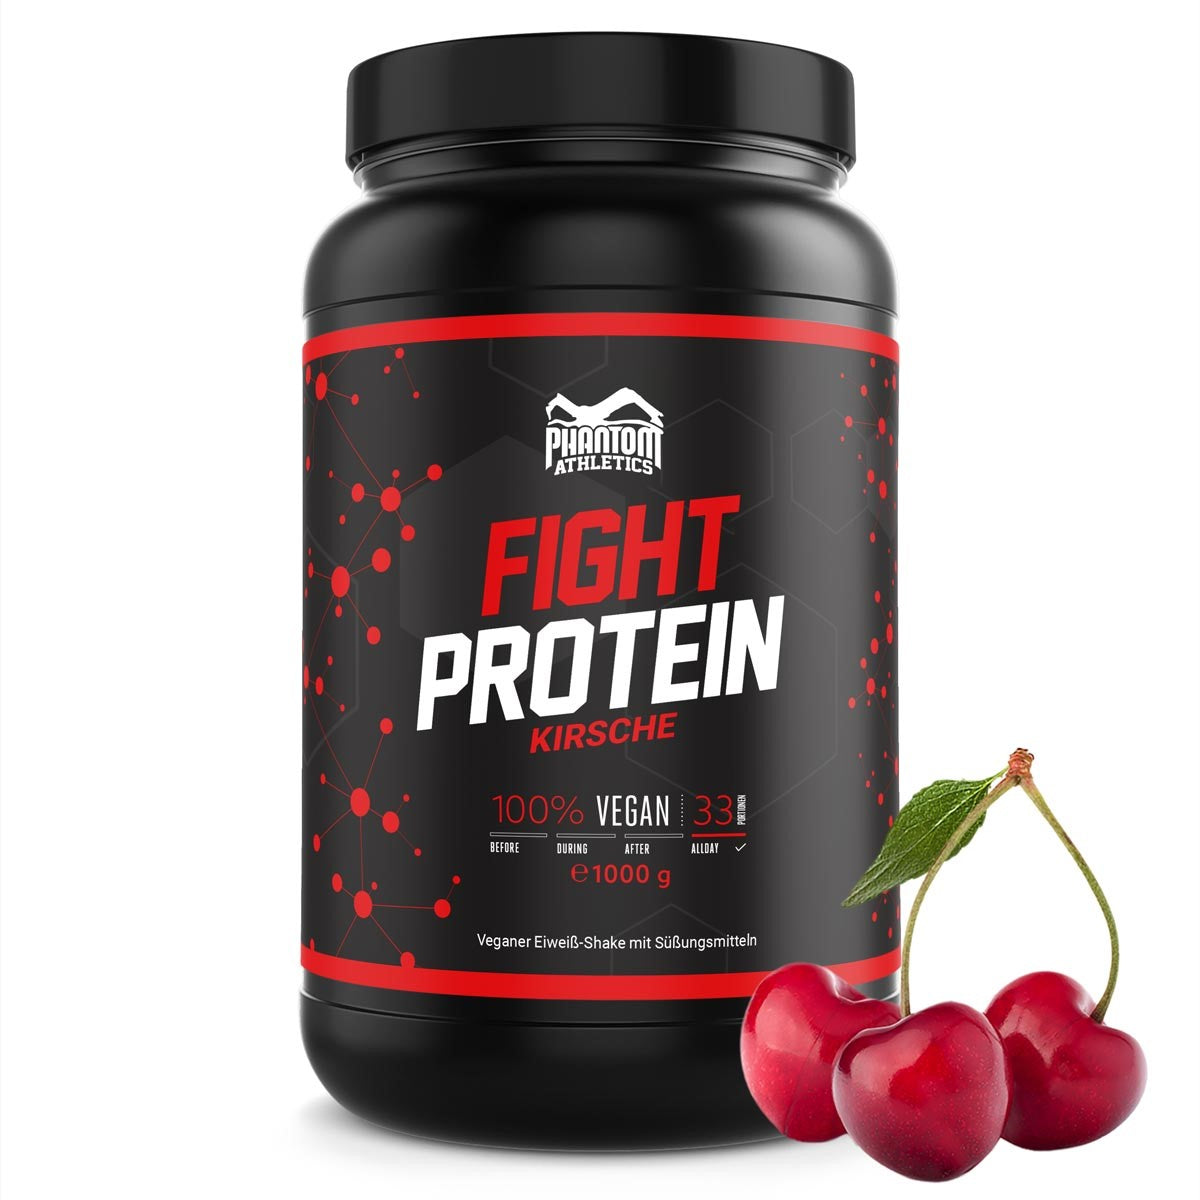 Fight protein - češnja - 1000g